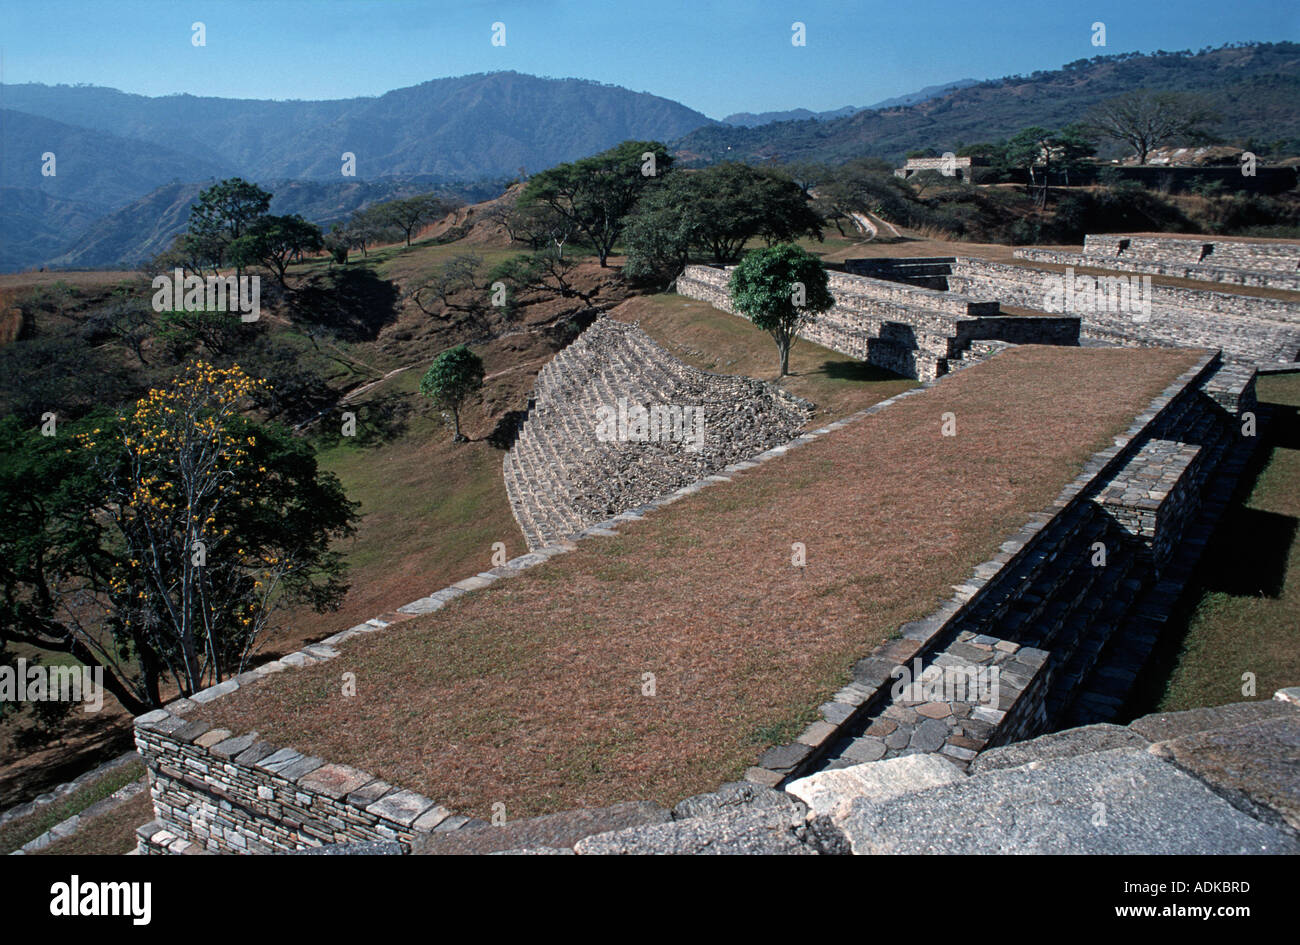 Le complexe de Maya Mixco Viejo montagnes du Guatemala Chimaltenango GUATEMALA Banque D'Images